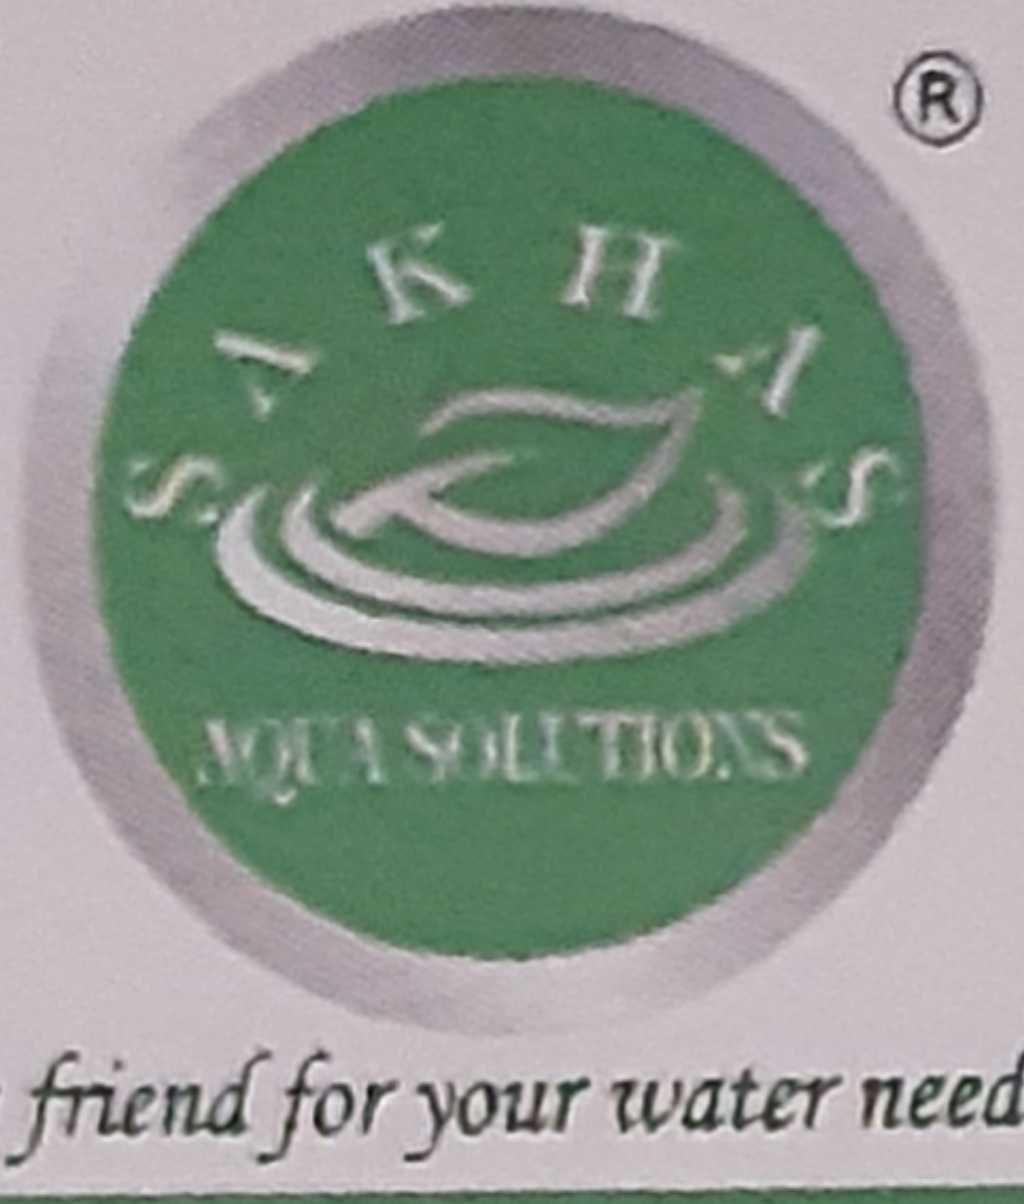 Sakhas Aqua Solutions